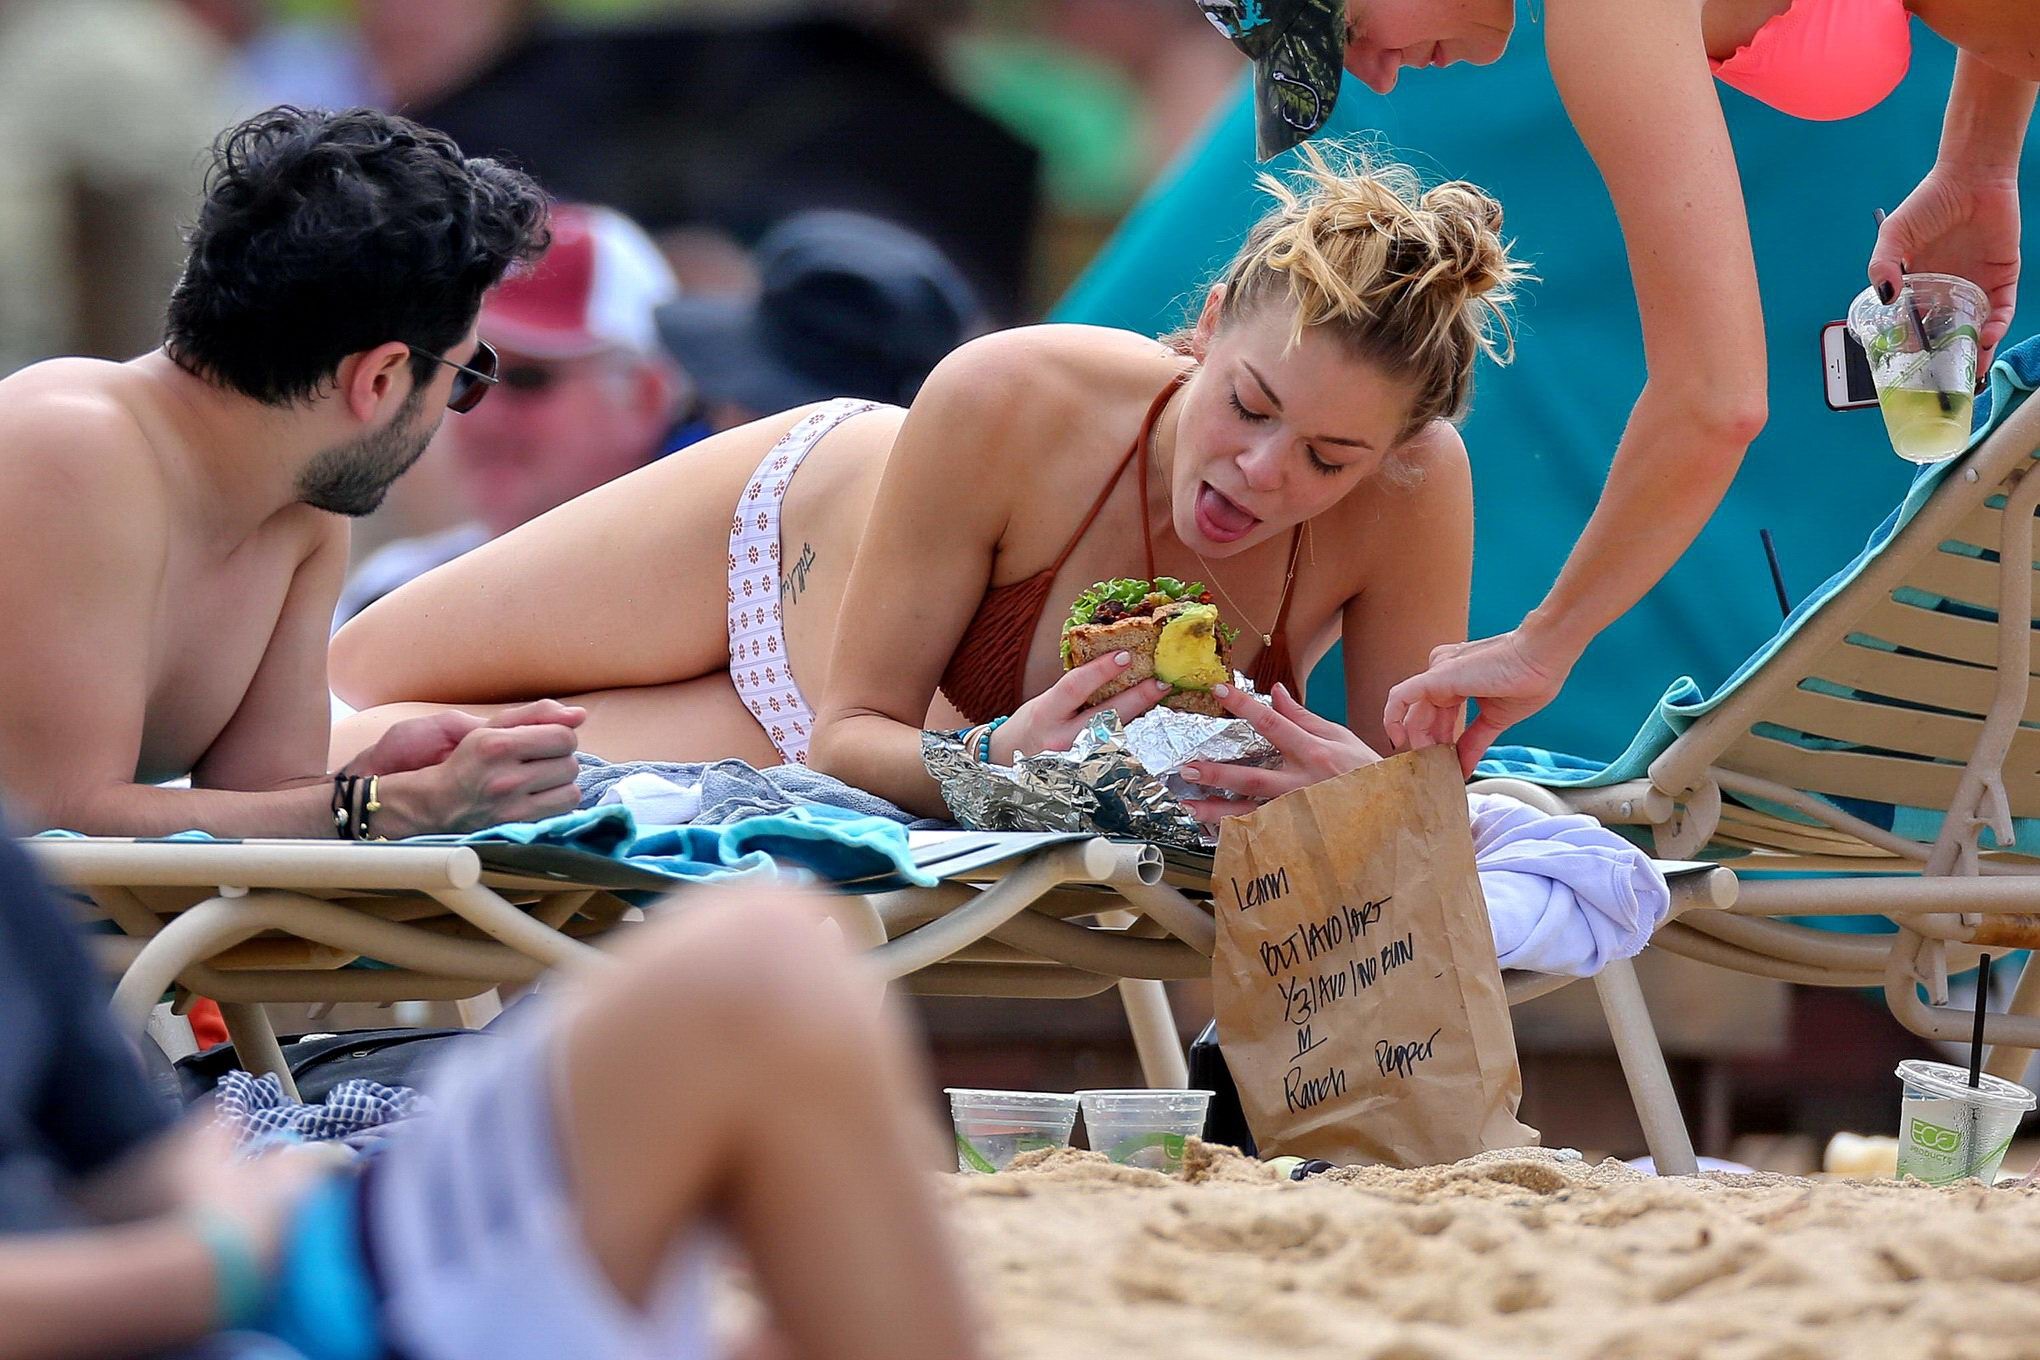 Leann rimes en bikini bronzant sur une plage hawaïenne.
 #75203282